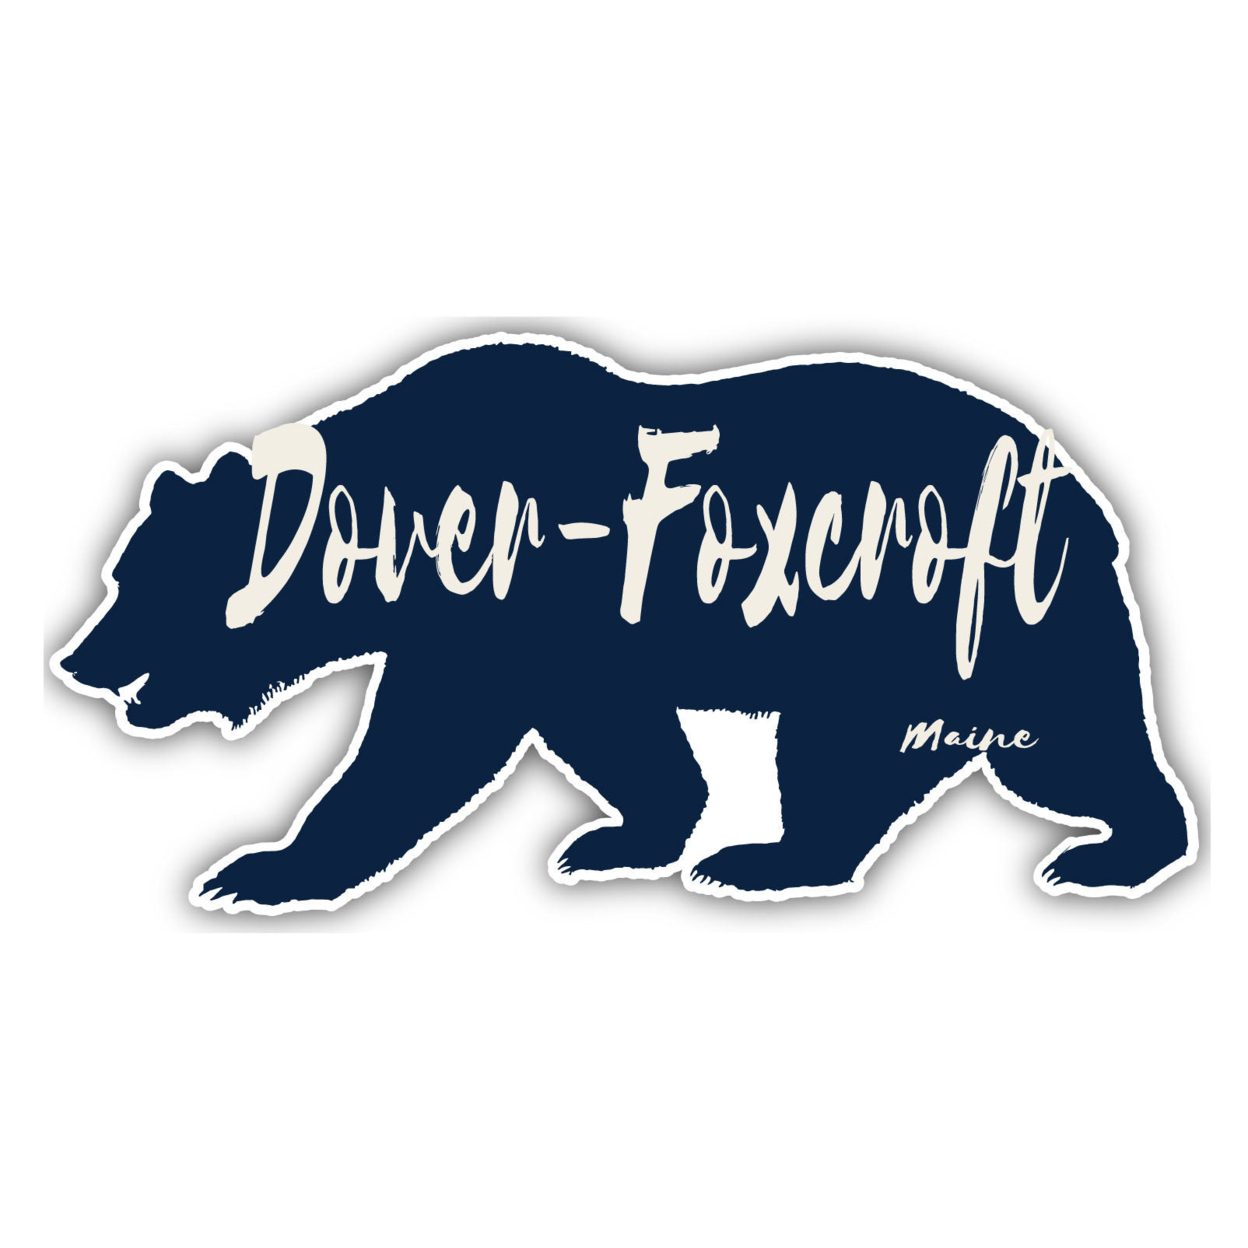 Dover-Foxcroft Maine Souvenir Decorative Stickers (Choose Theme And Size) - Single Unit, 4-Inch, Bear